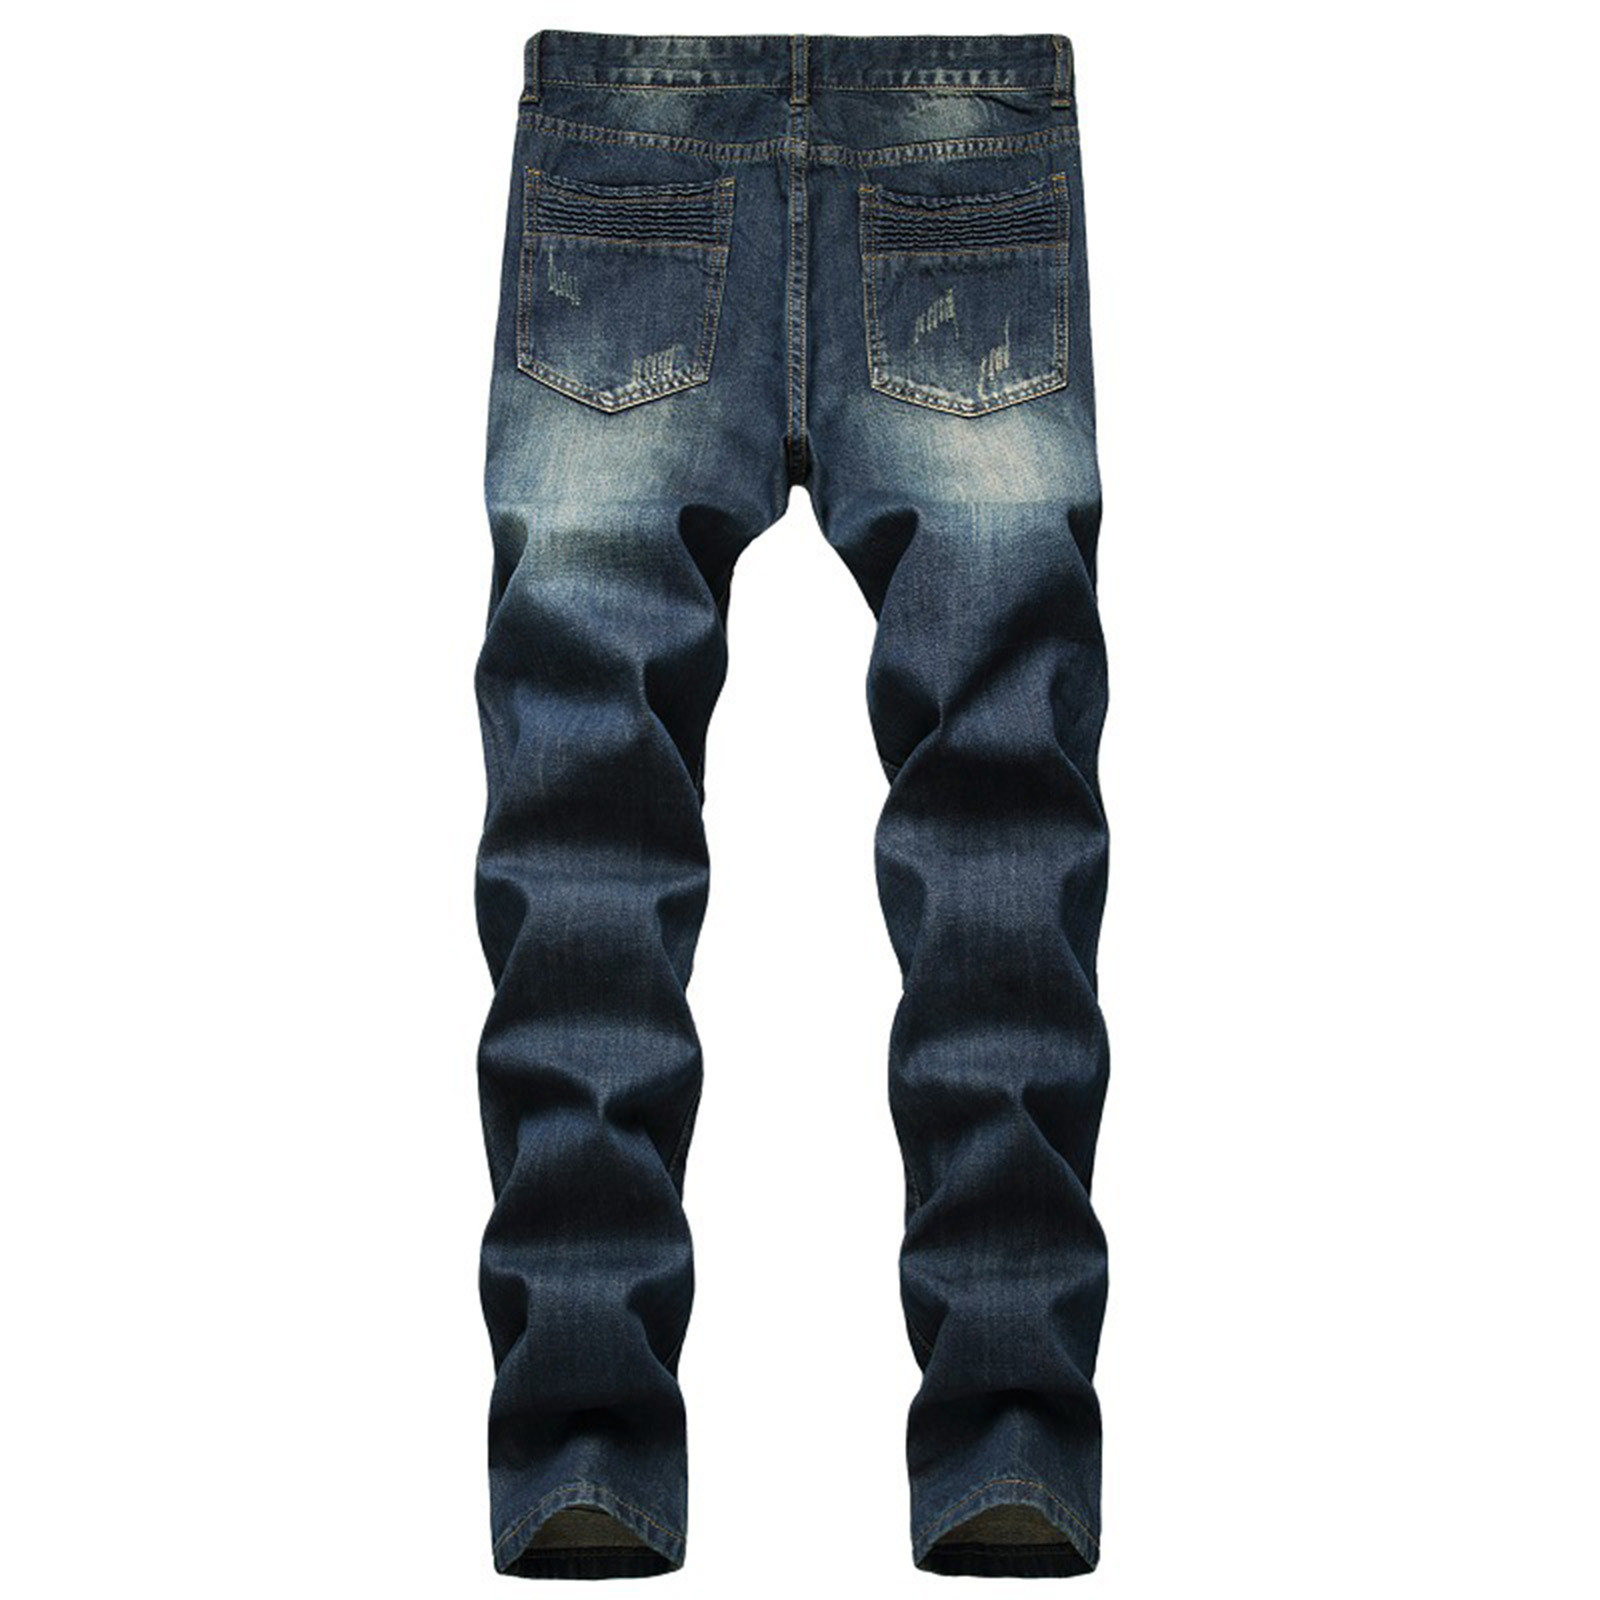 DDAPJ pyju Men Ripped Jeans Vintage Distressed Faded Jean Pants Slim ...